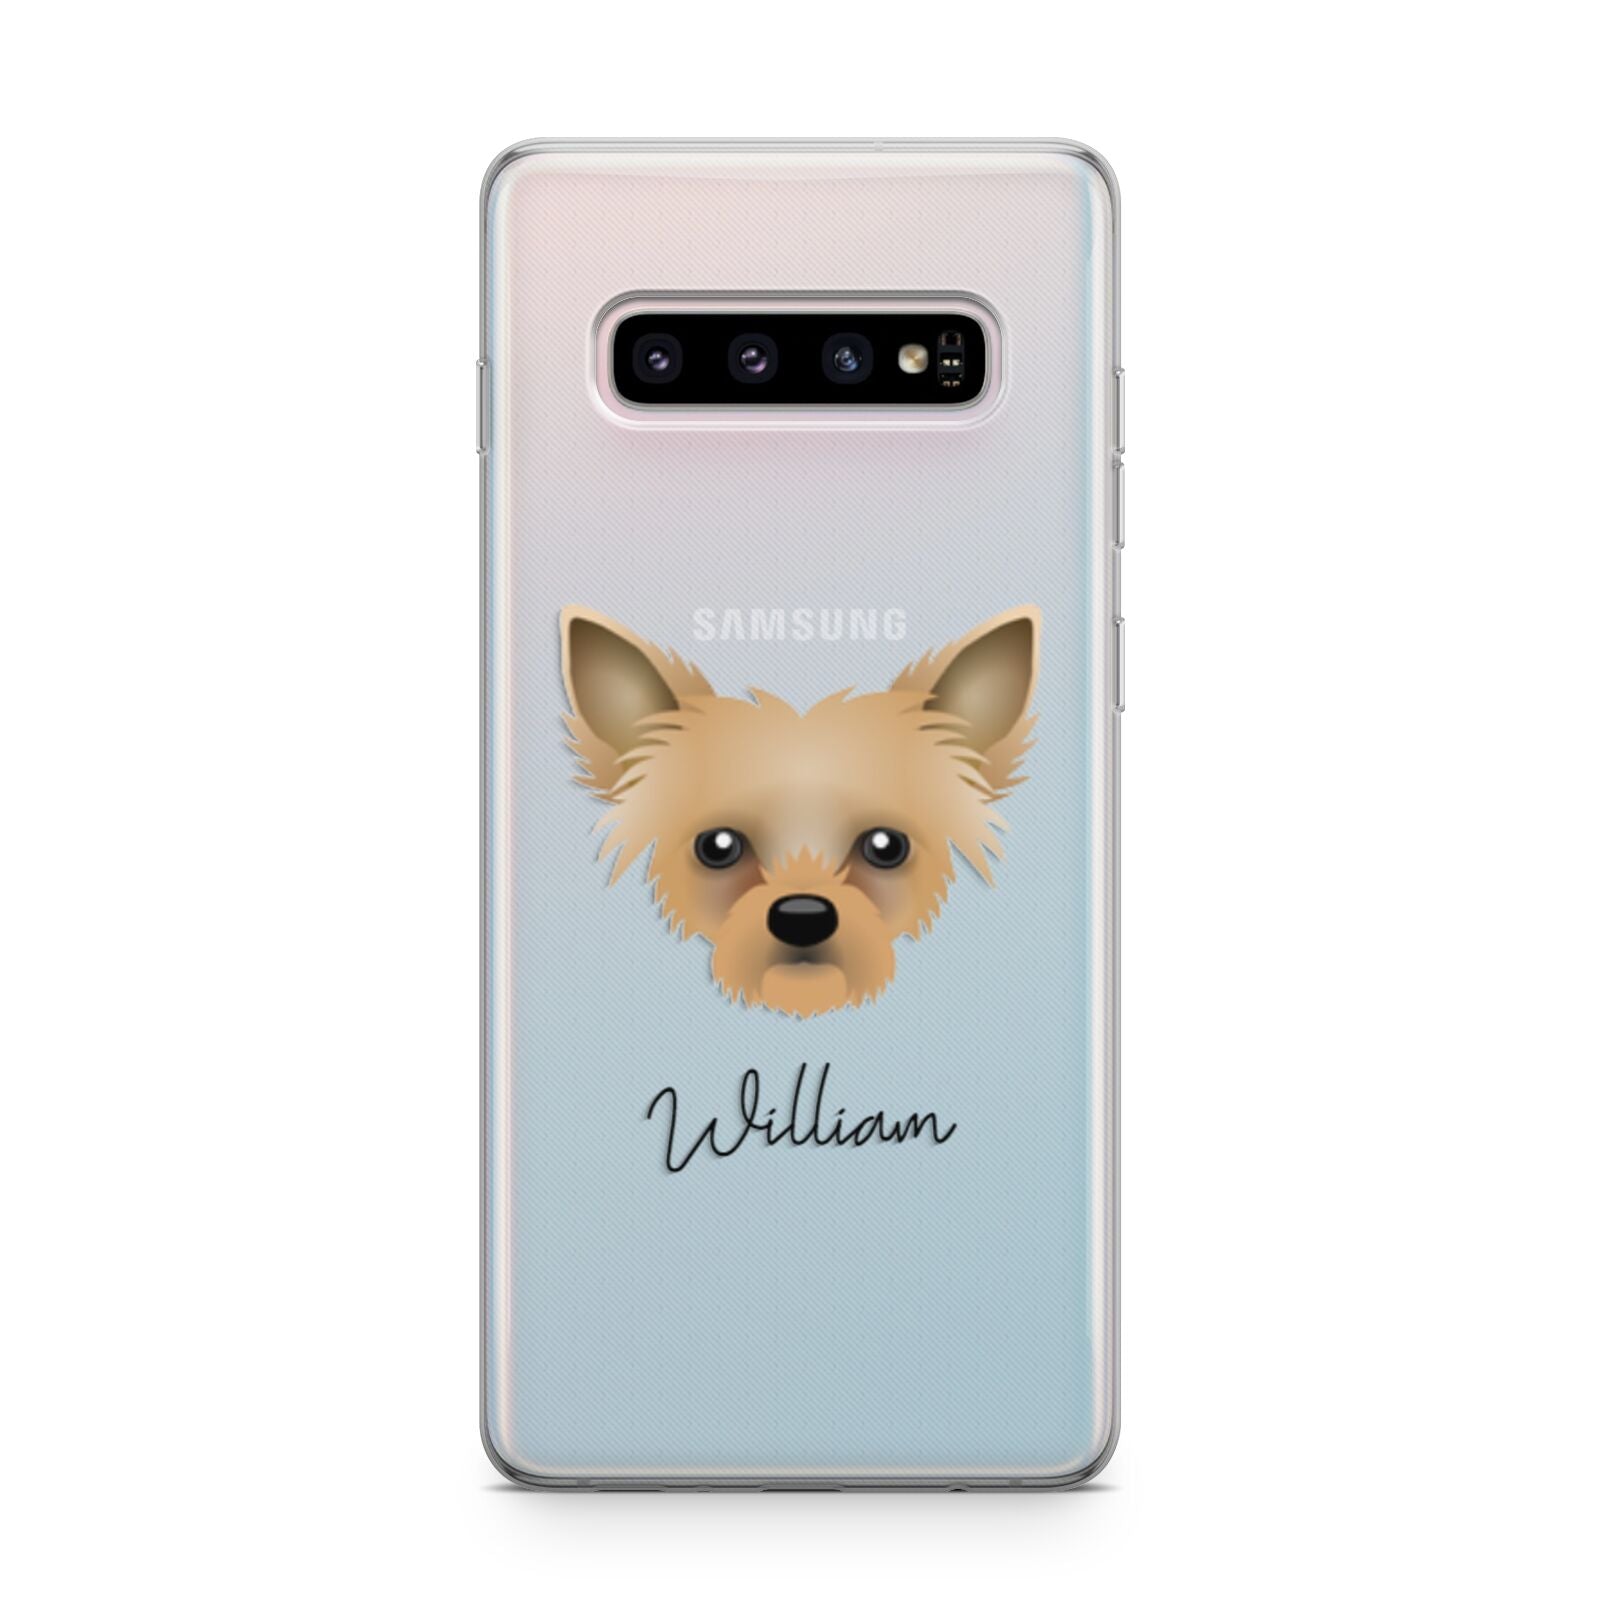 Chipoo Personalised Samsung Galaxy S10 Plus Case